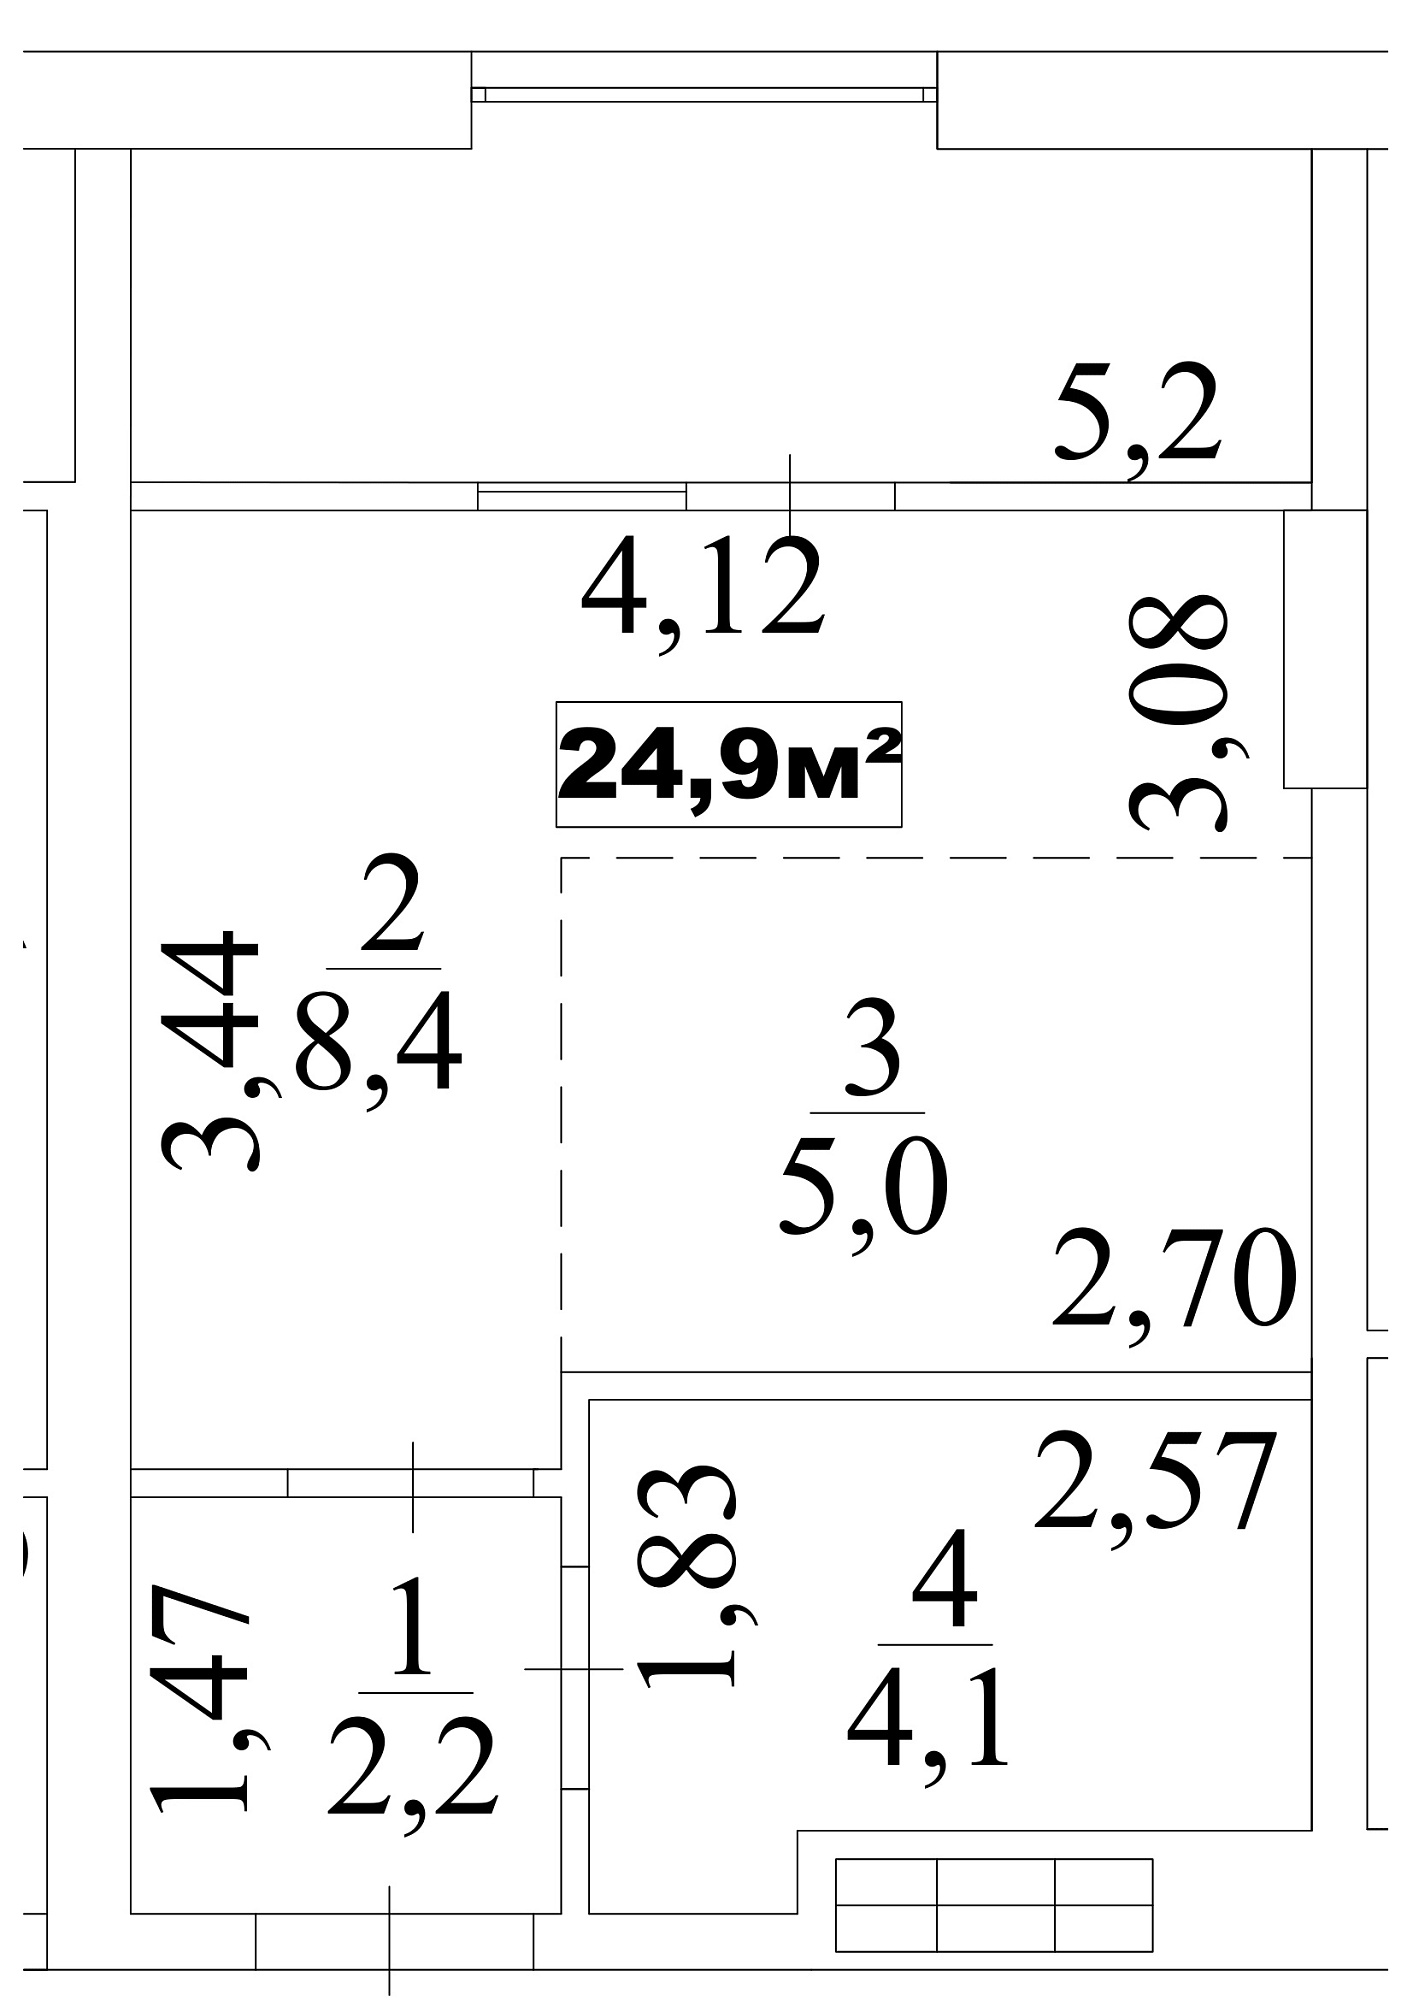 Планировка Smart-квартира площей 24.9м2, AB-10-07/0057в.